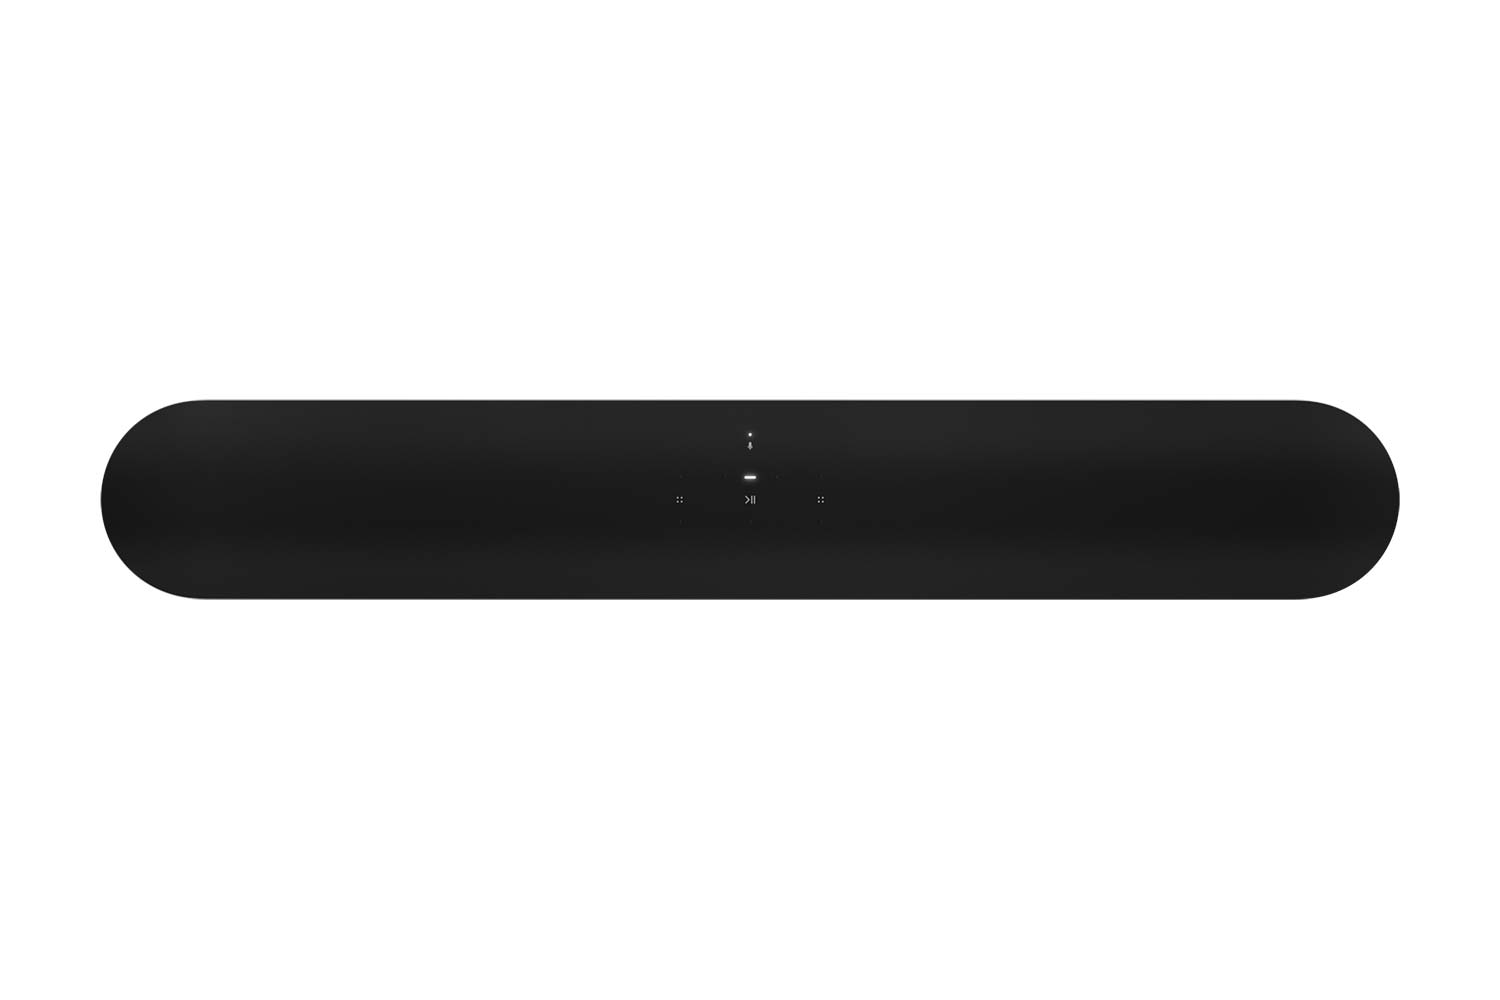 Sonos Beam Soundbar oben schwarz